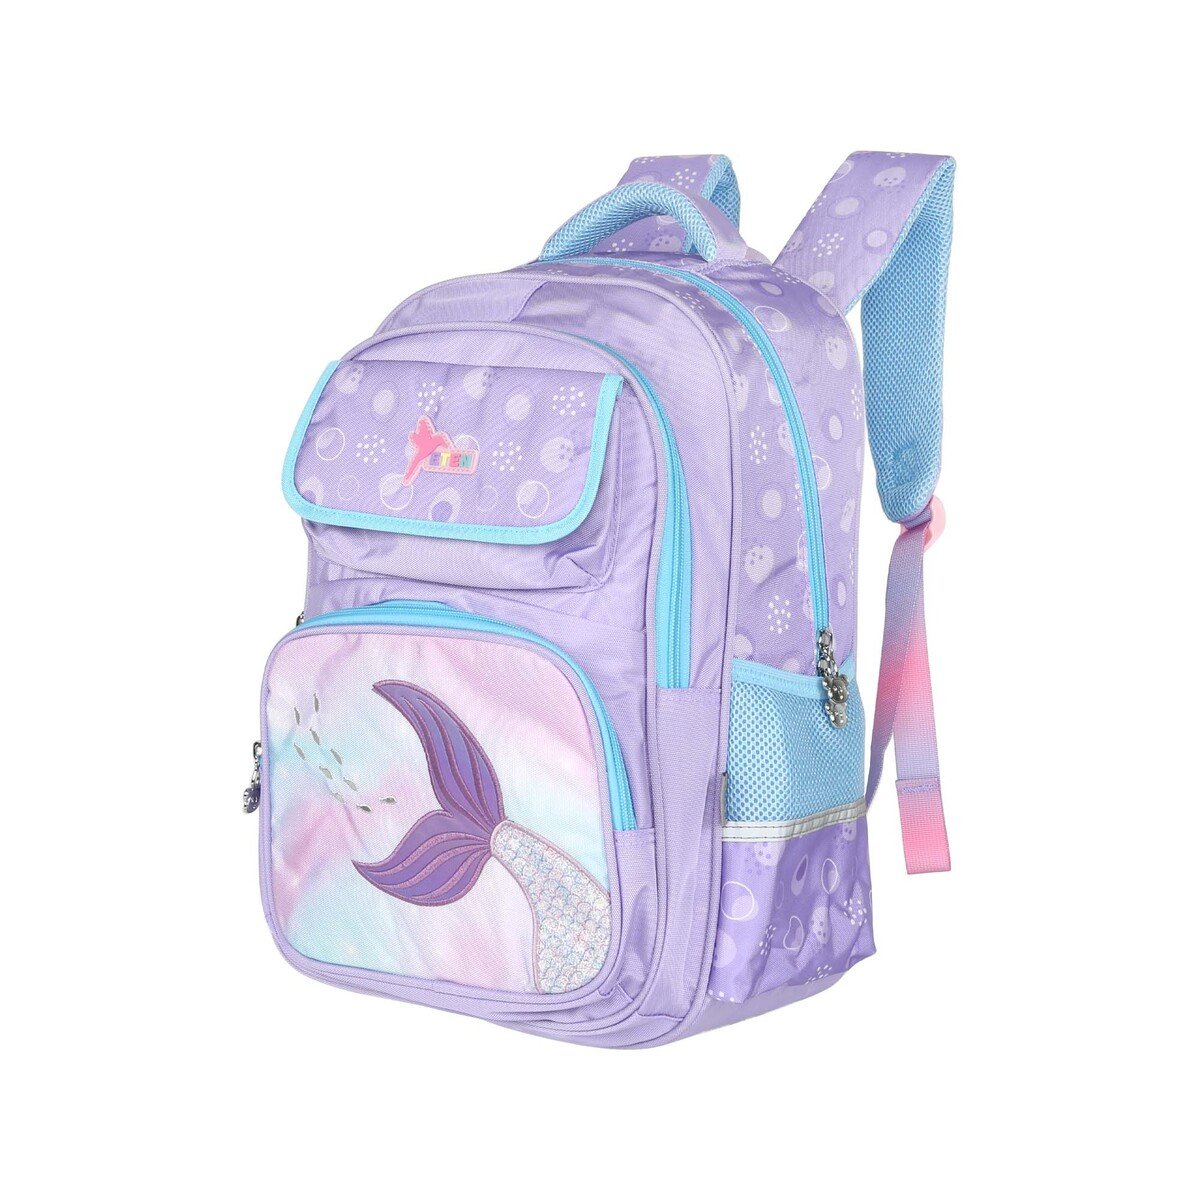 Eten Elementary Backpack 22009 16inch Assorted